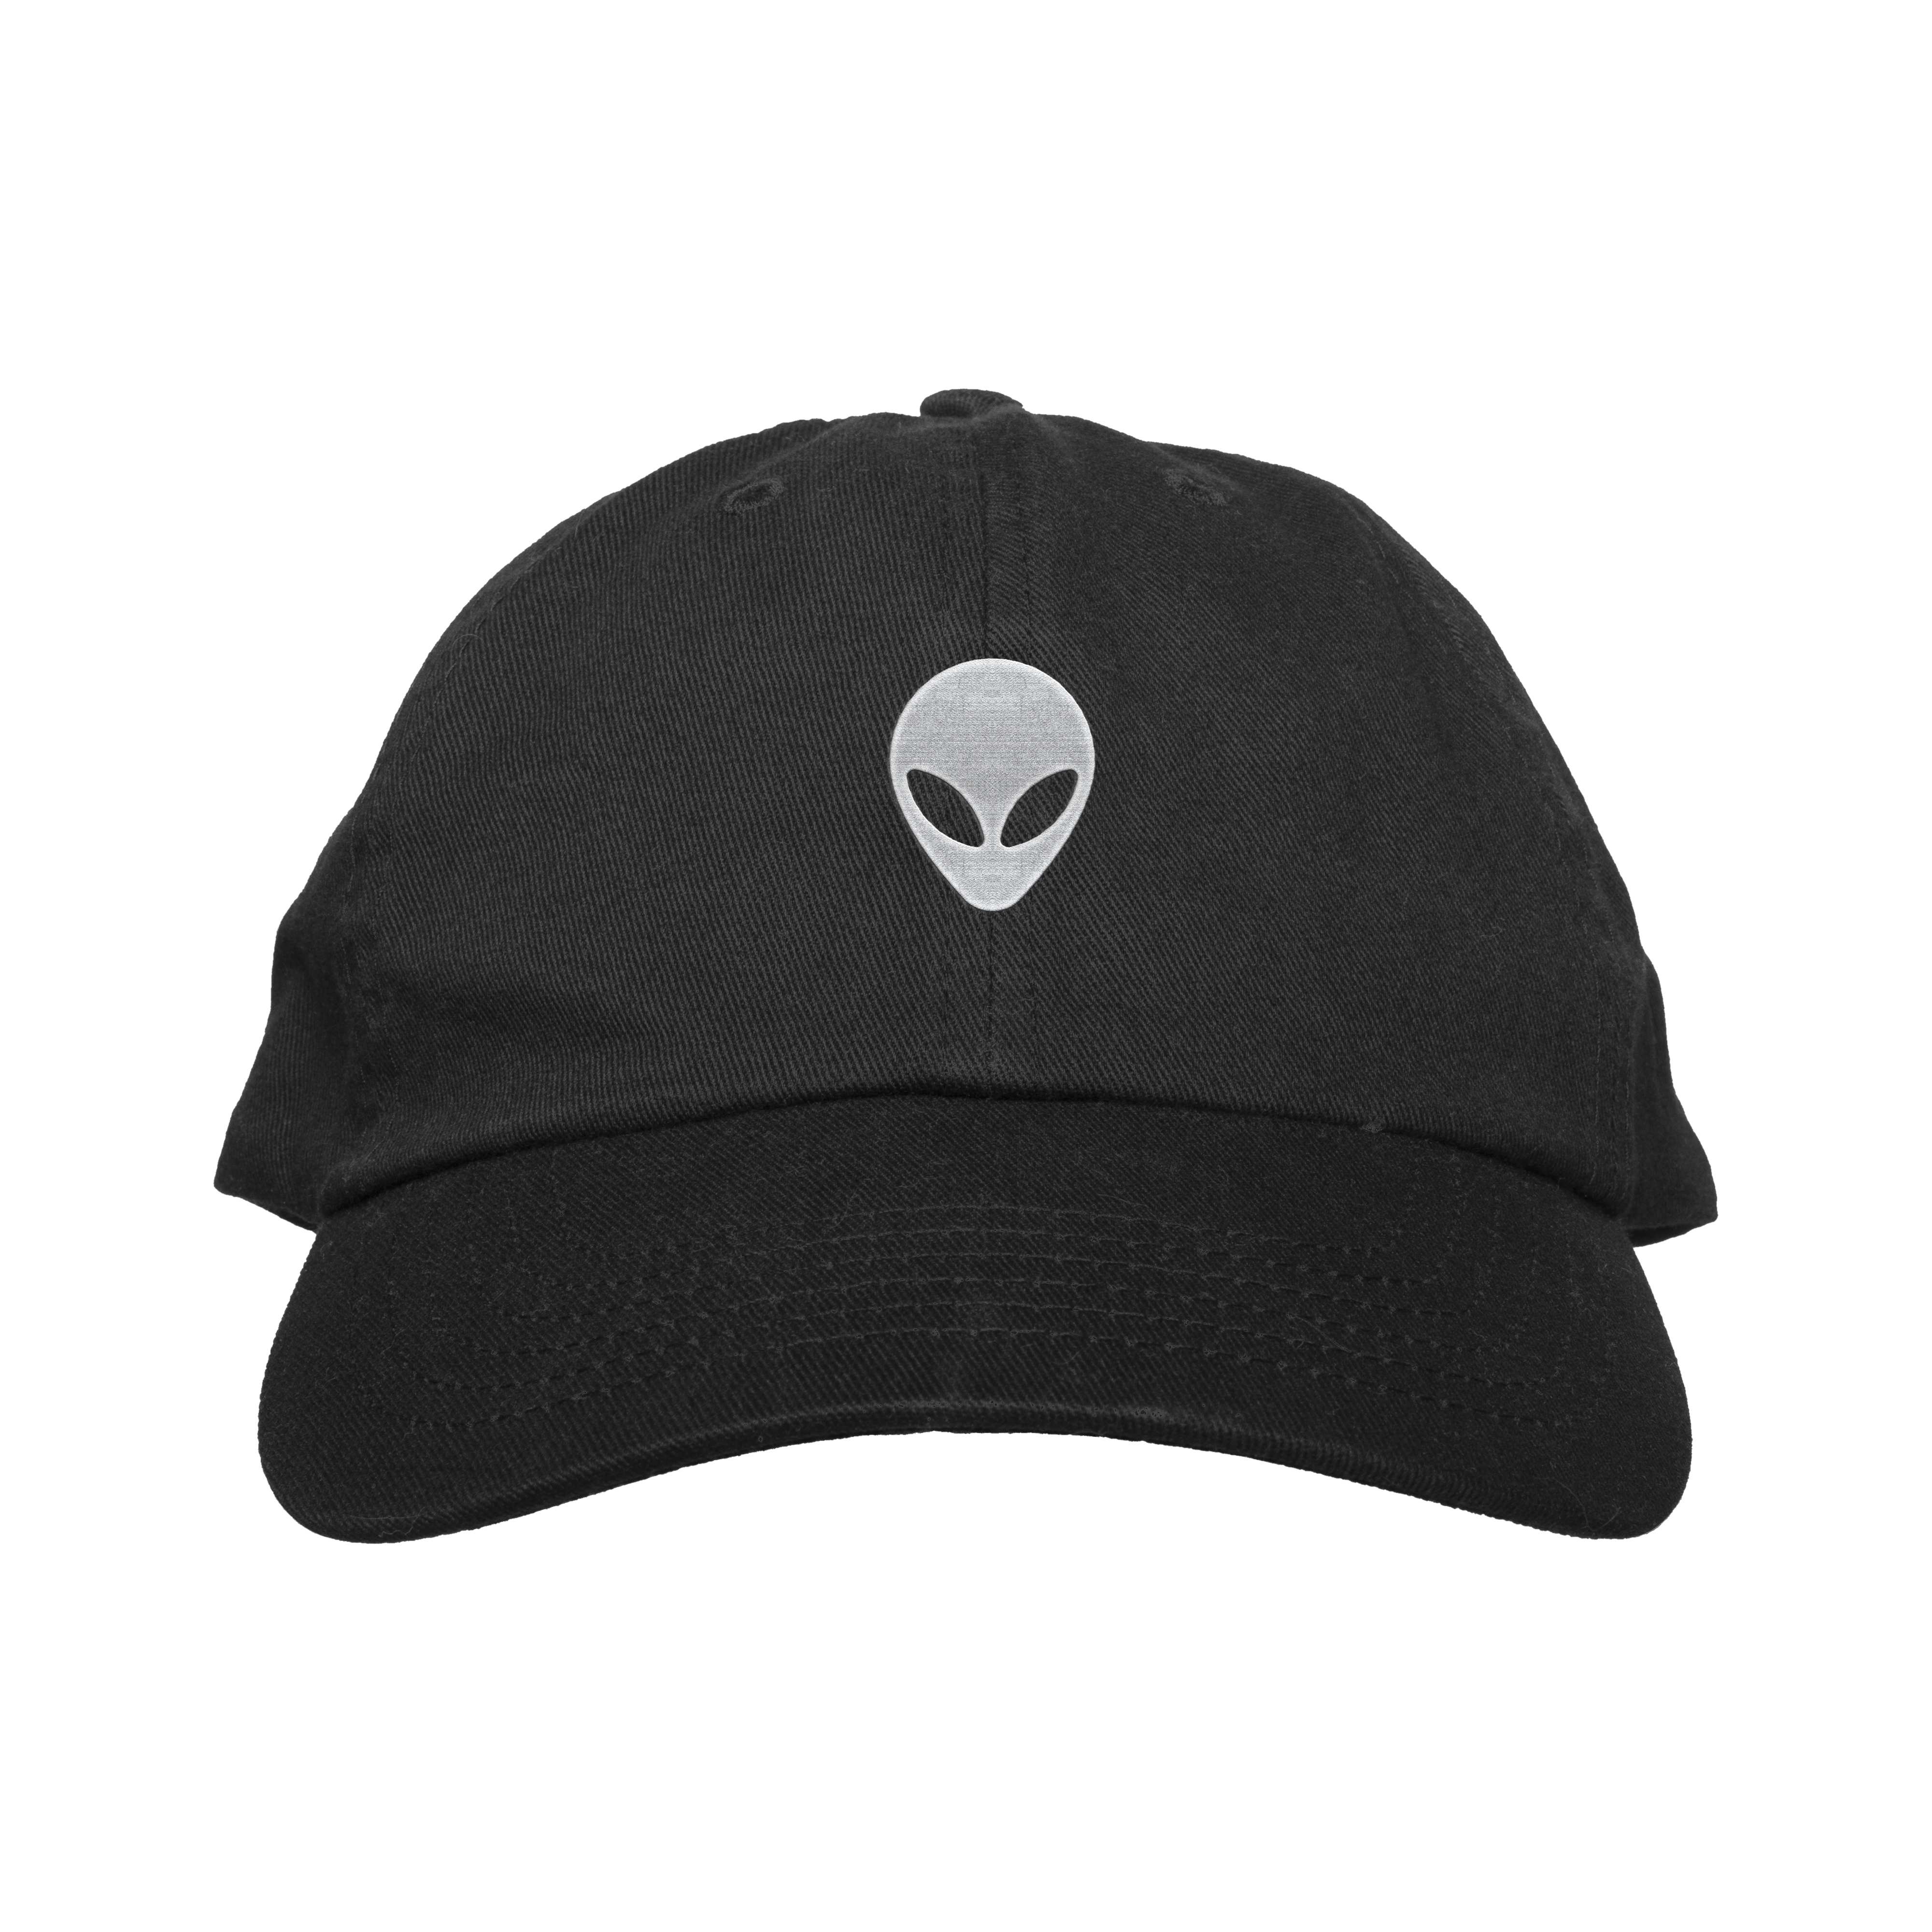 Alienwear - Glow In The Dark Dad Embroidered Hat